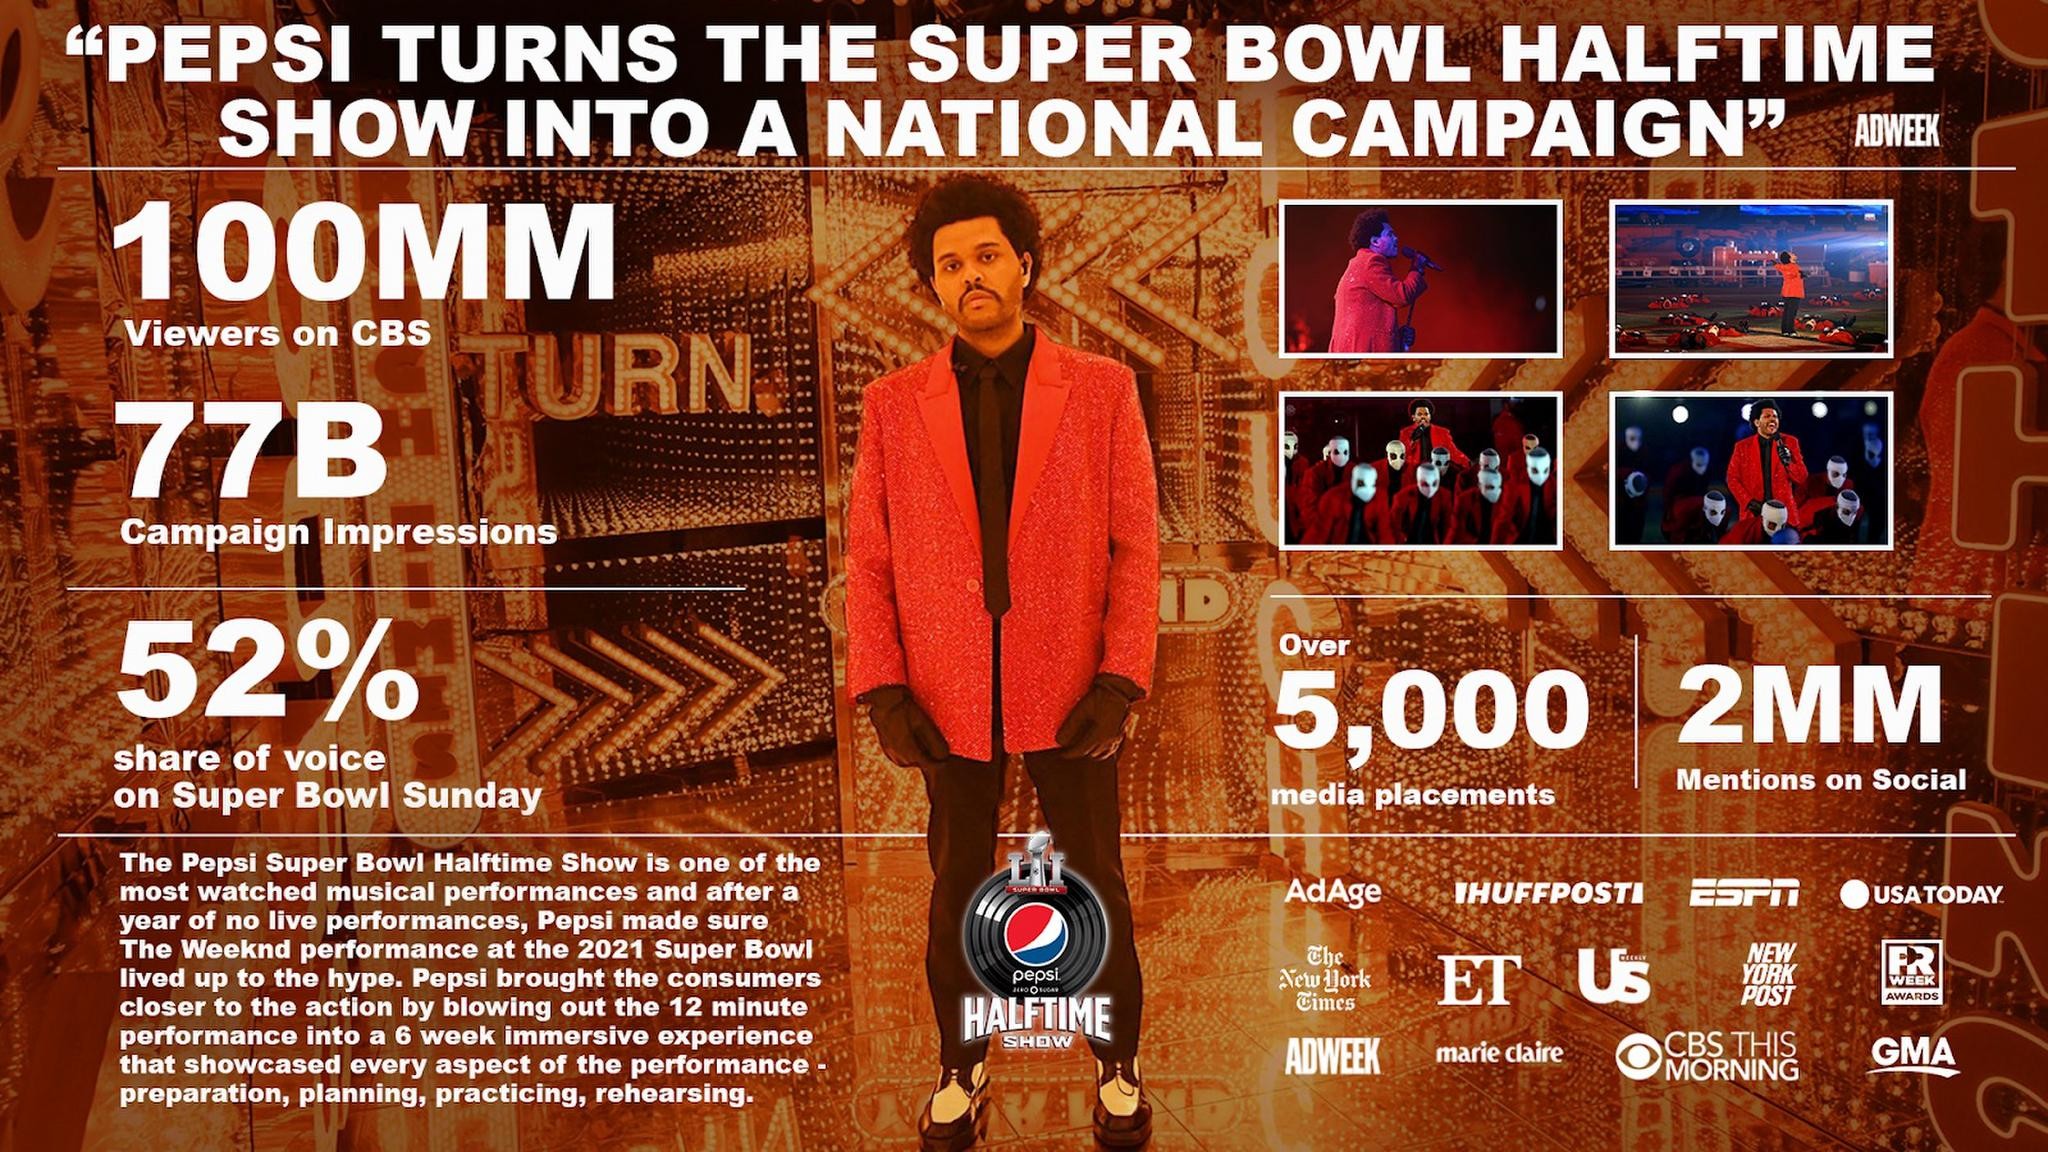 Pepsi Super Bowl 55 Halftime Show